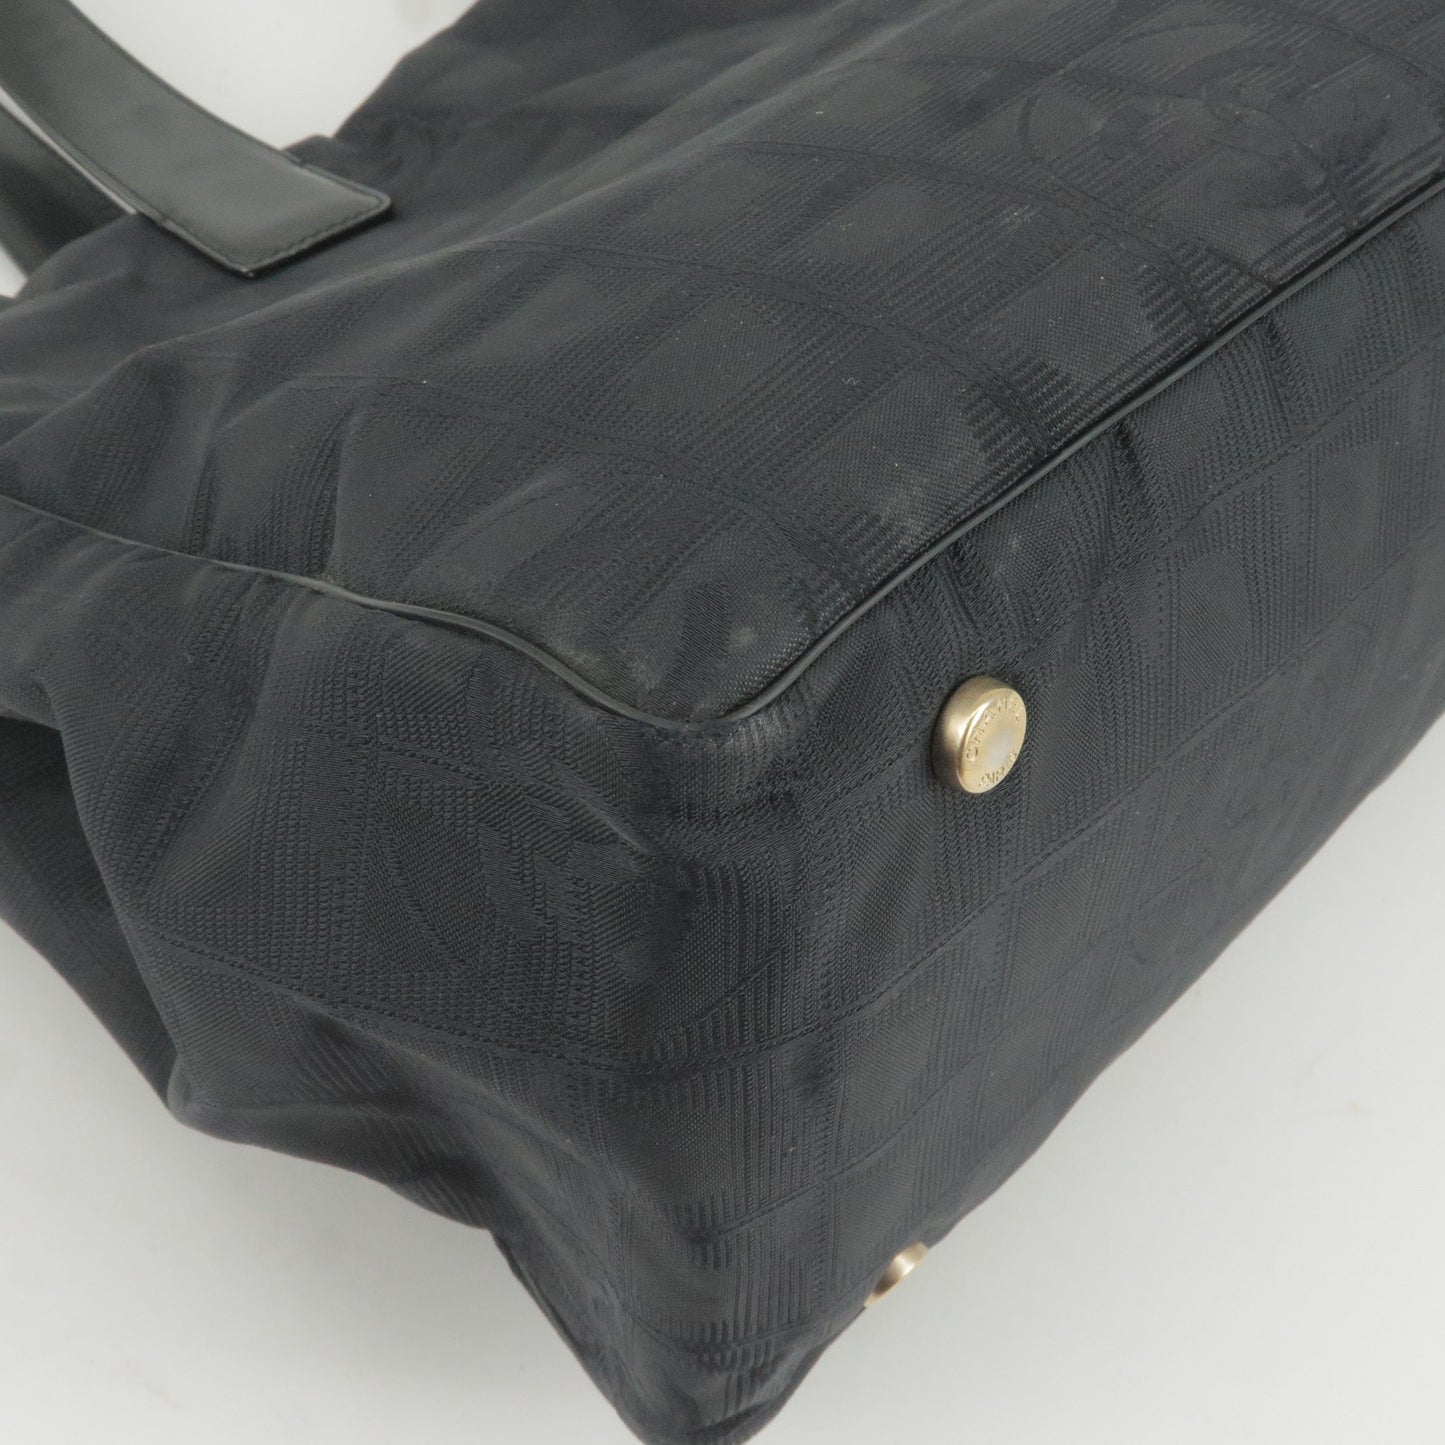 CHANEL New Travel Line Nylon Jacquard Leather Tote Bag Black A15991